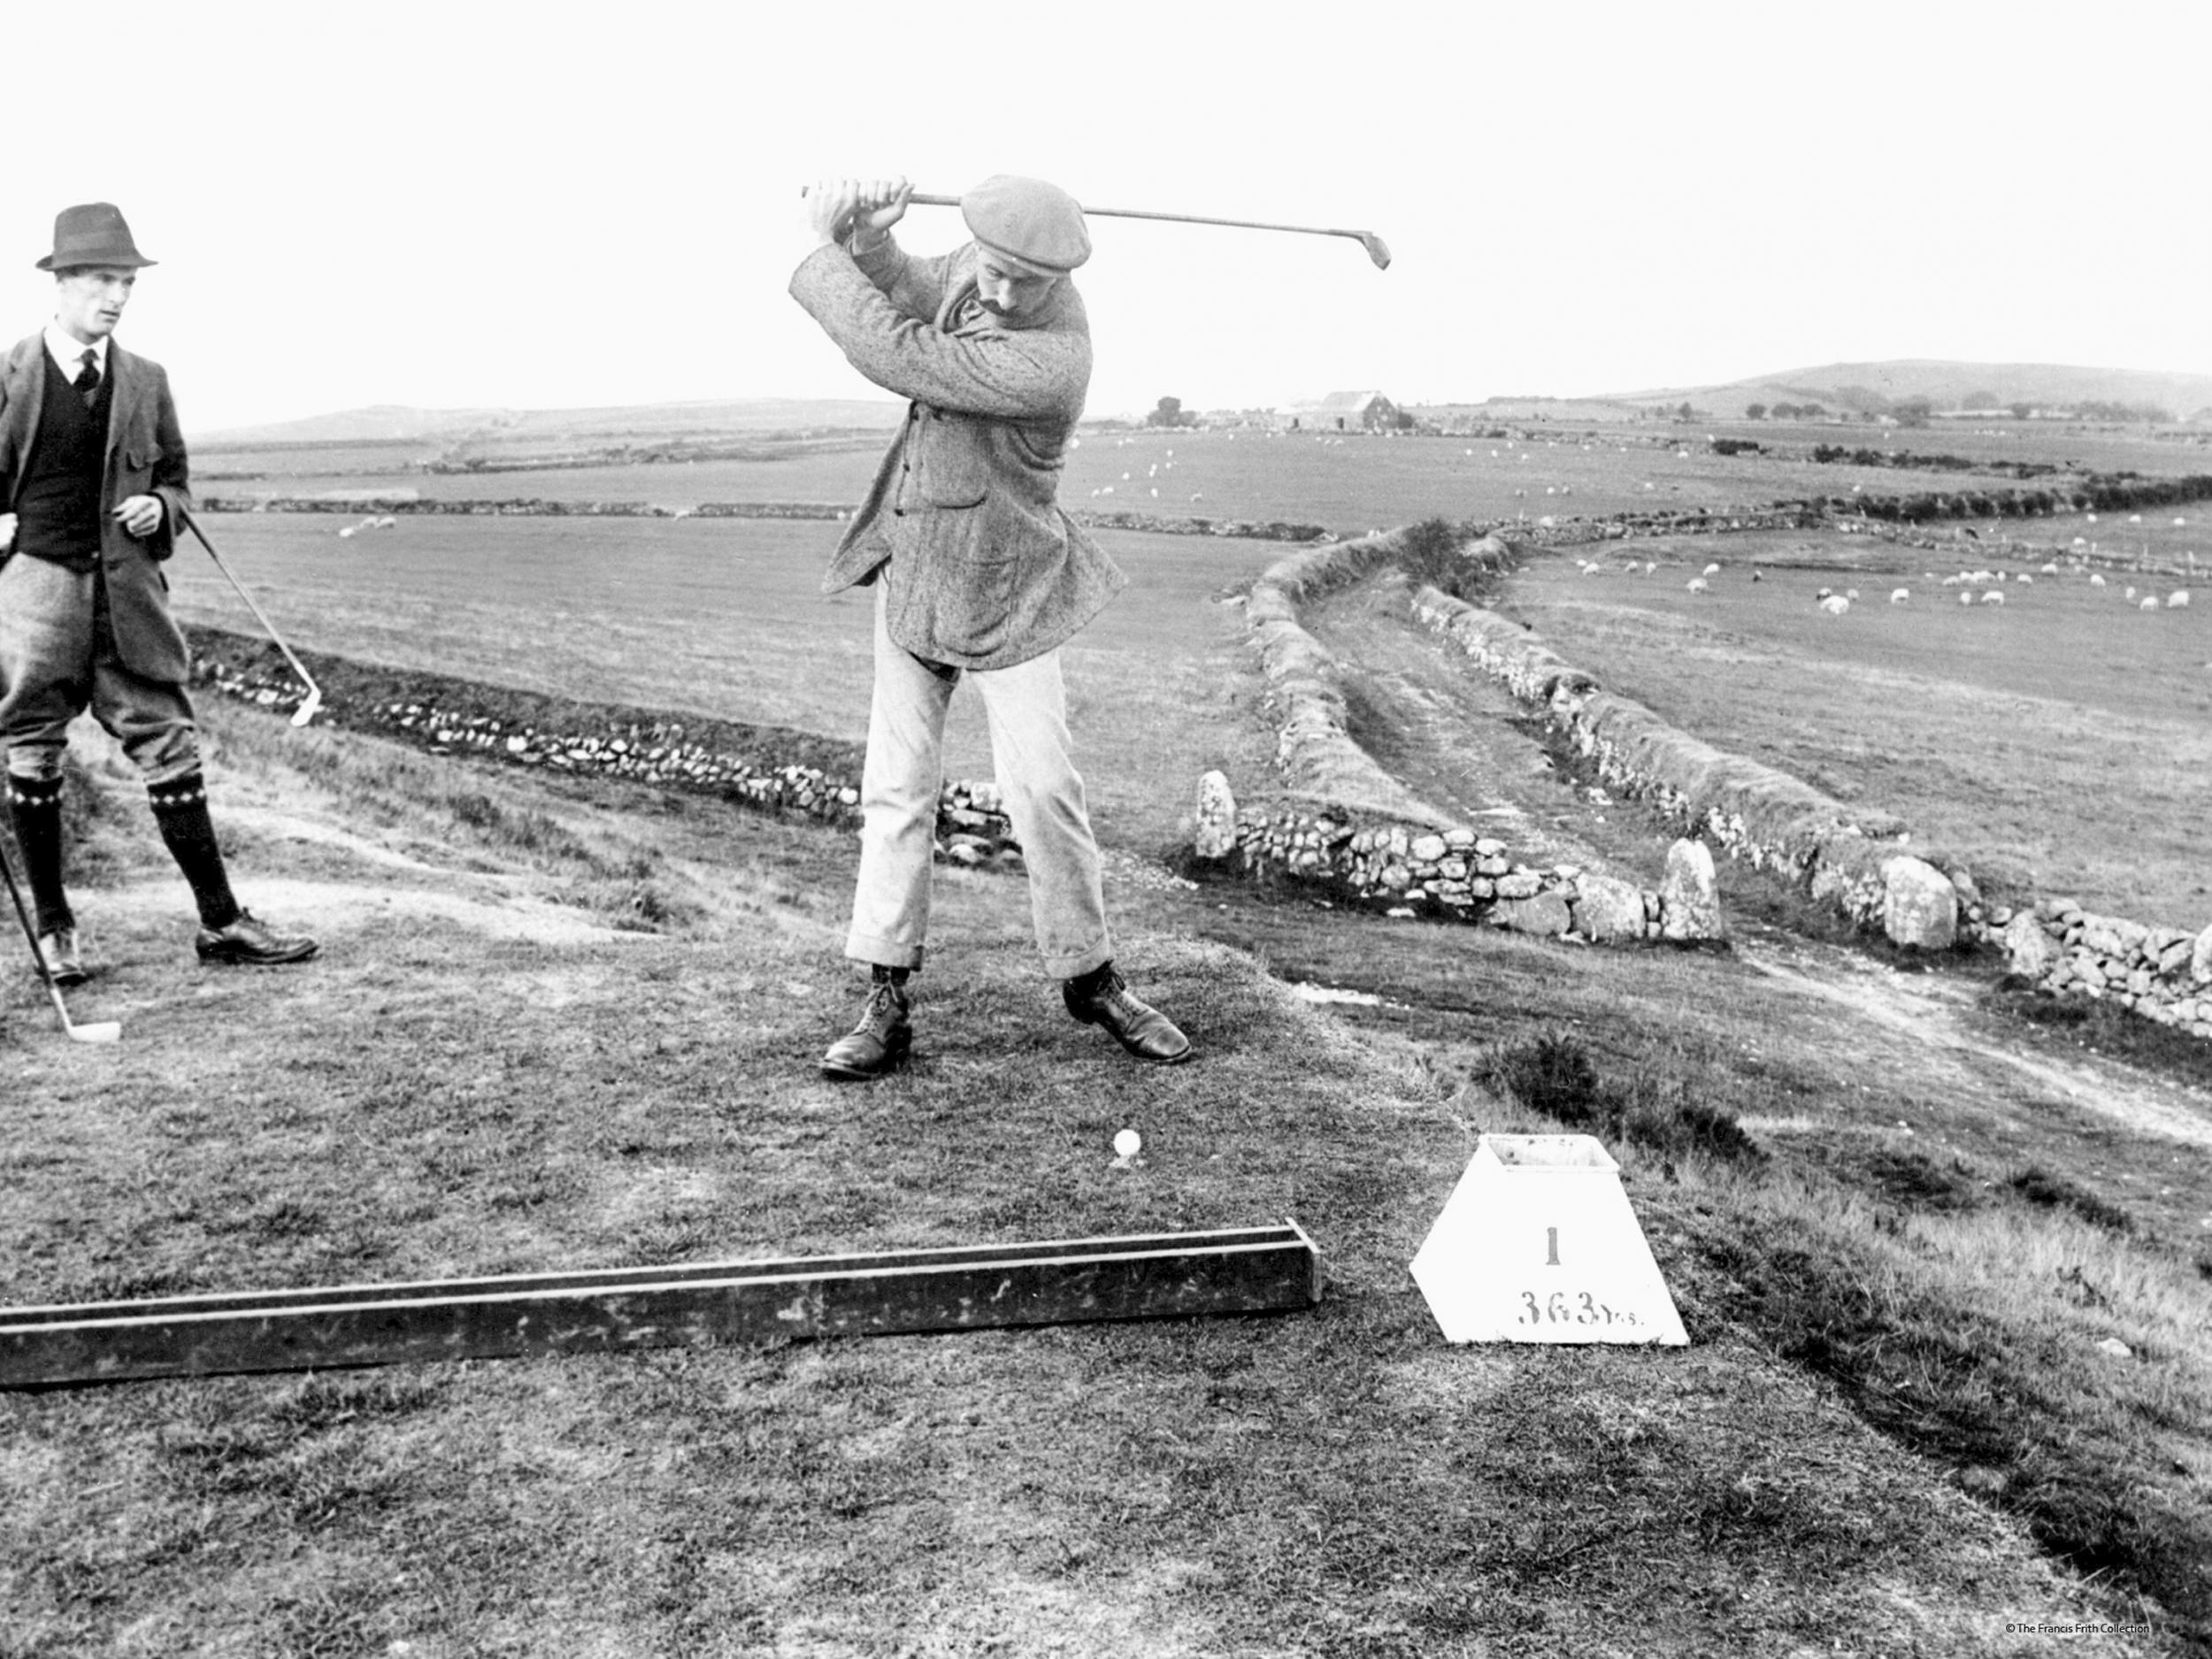 Two men play golf in Criccieth, Wales, in 1913